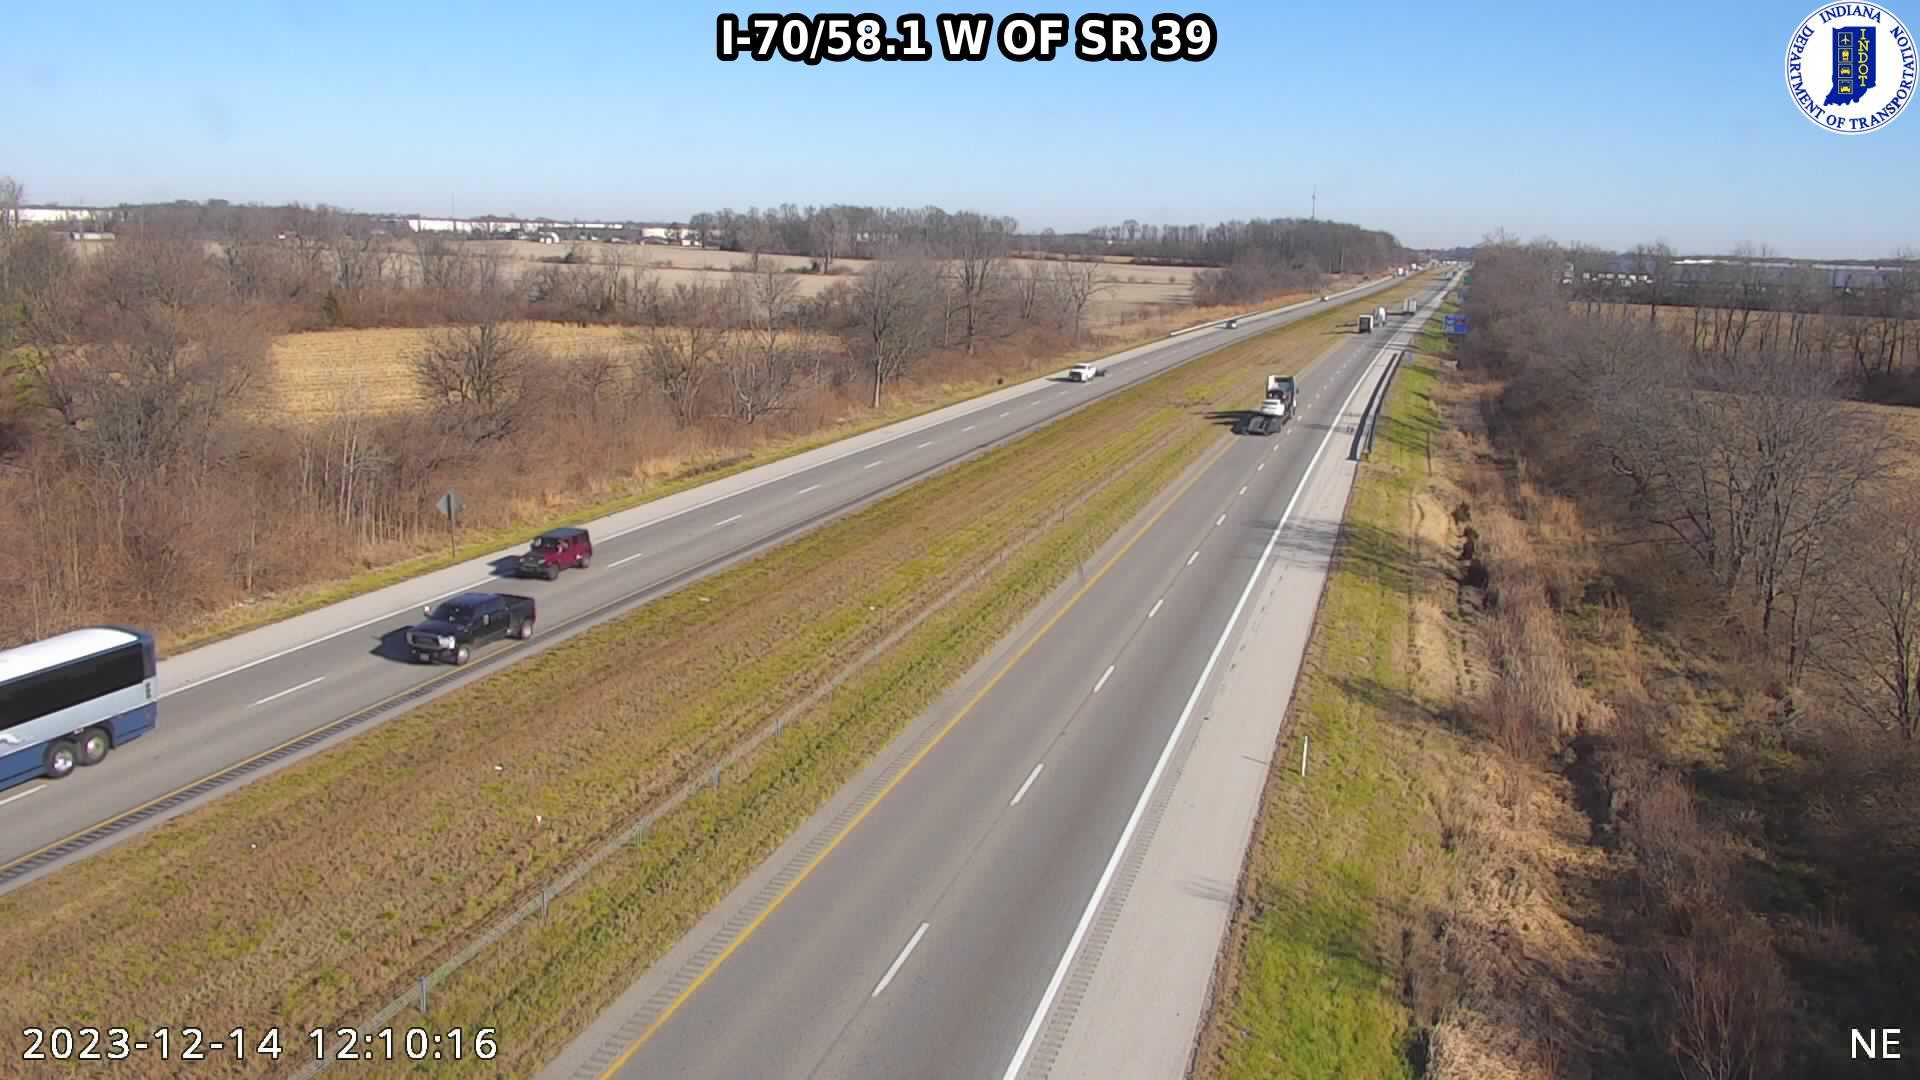 Hazelwood: I-70: I-70/58.1 W OF SR Traffic Camera